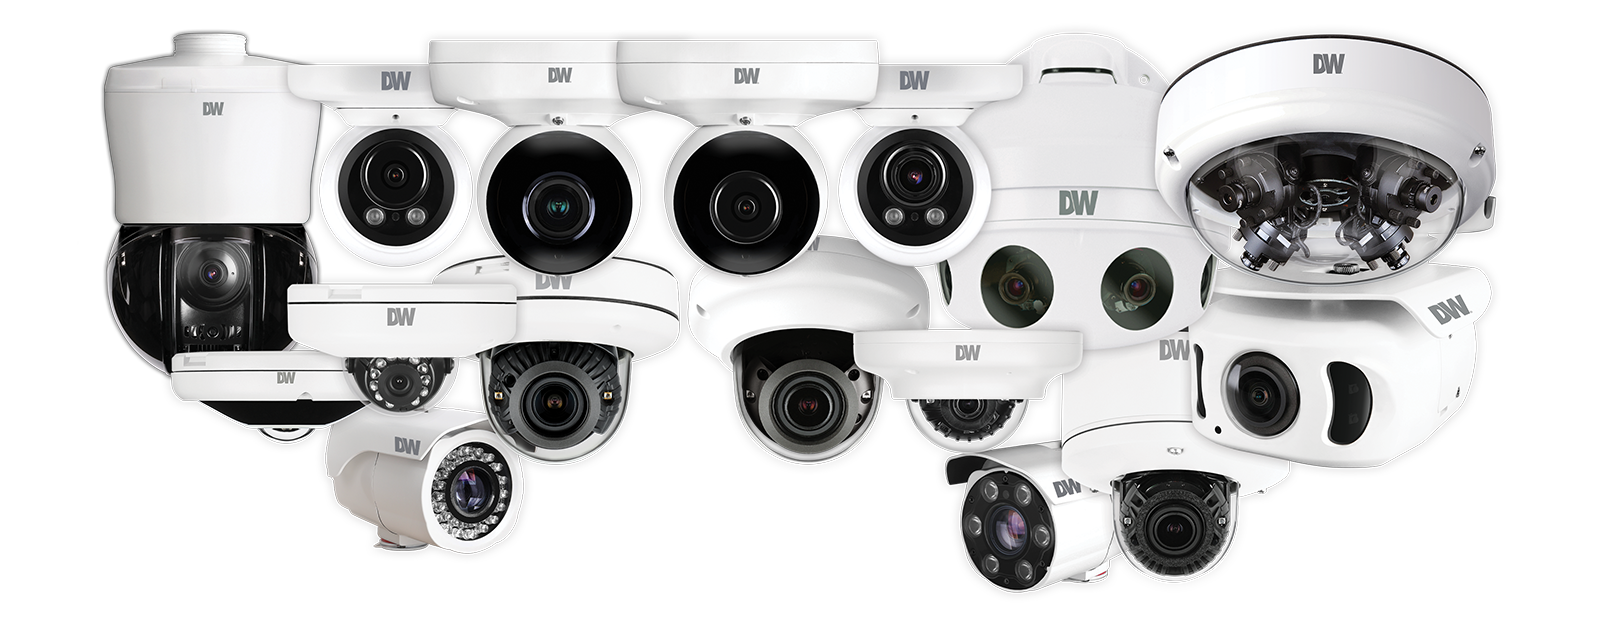 Digital Watchdog assortment of surveillance cameras